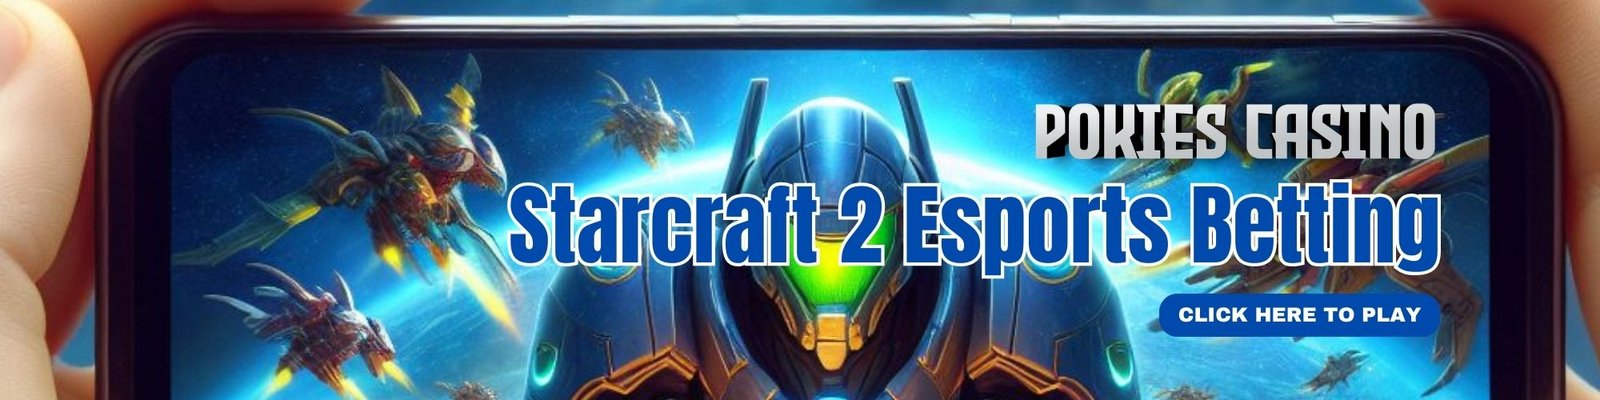 Starcraft 2 Esports Betting in PokiesCasino